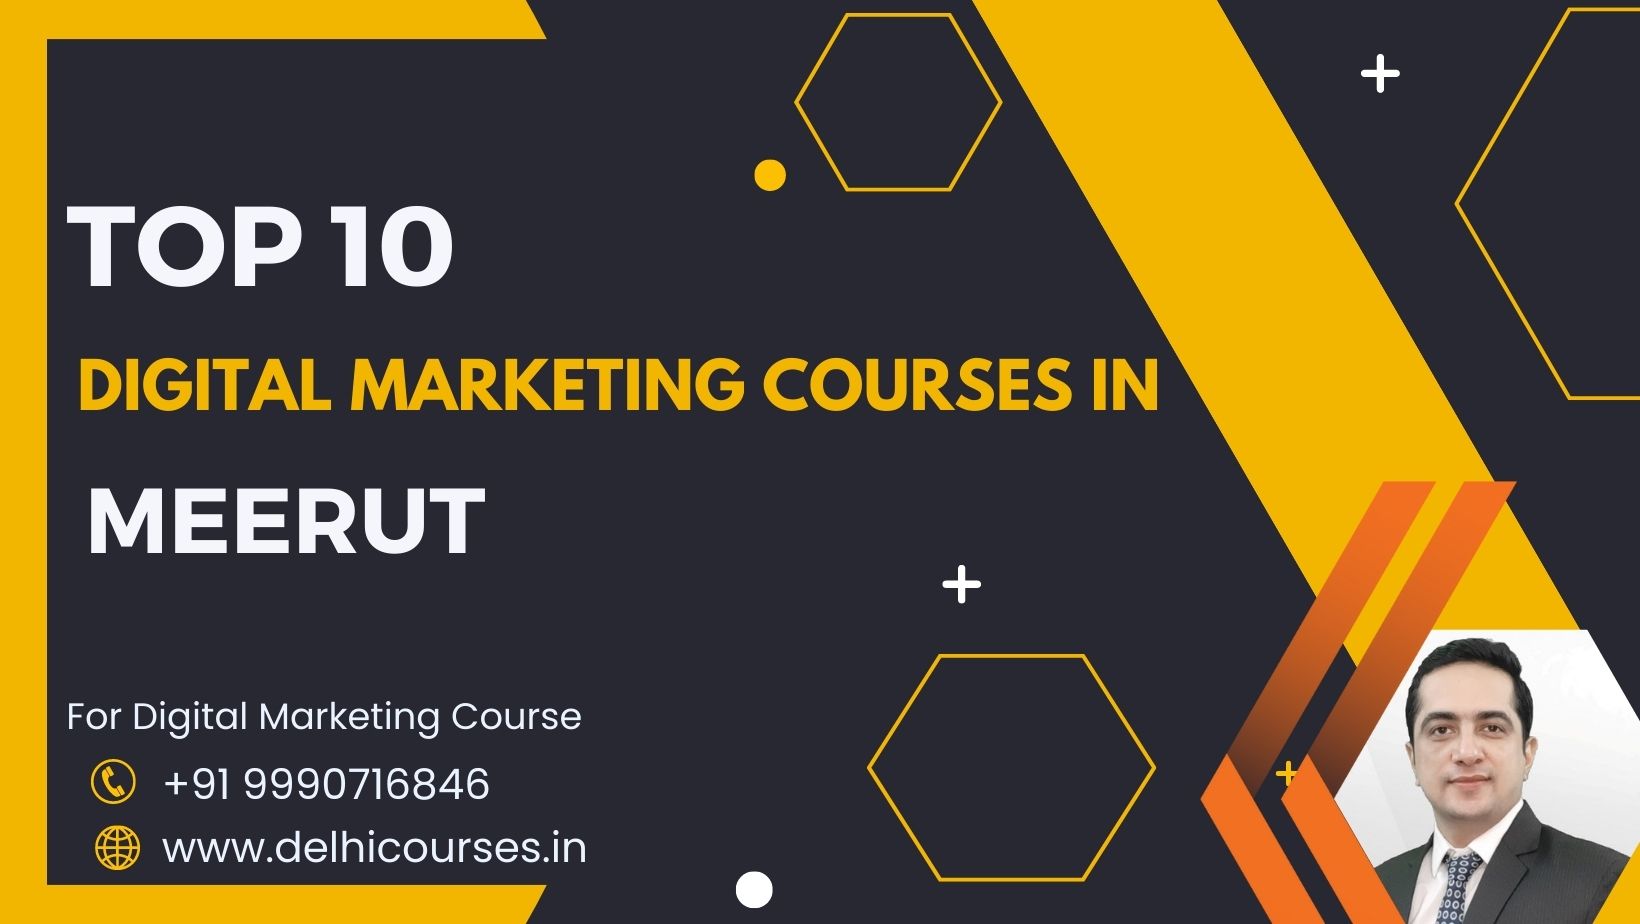 Digital Marketing courses in Meerut